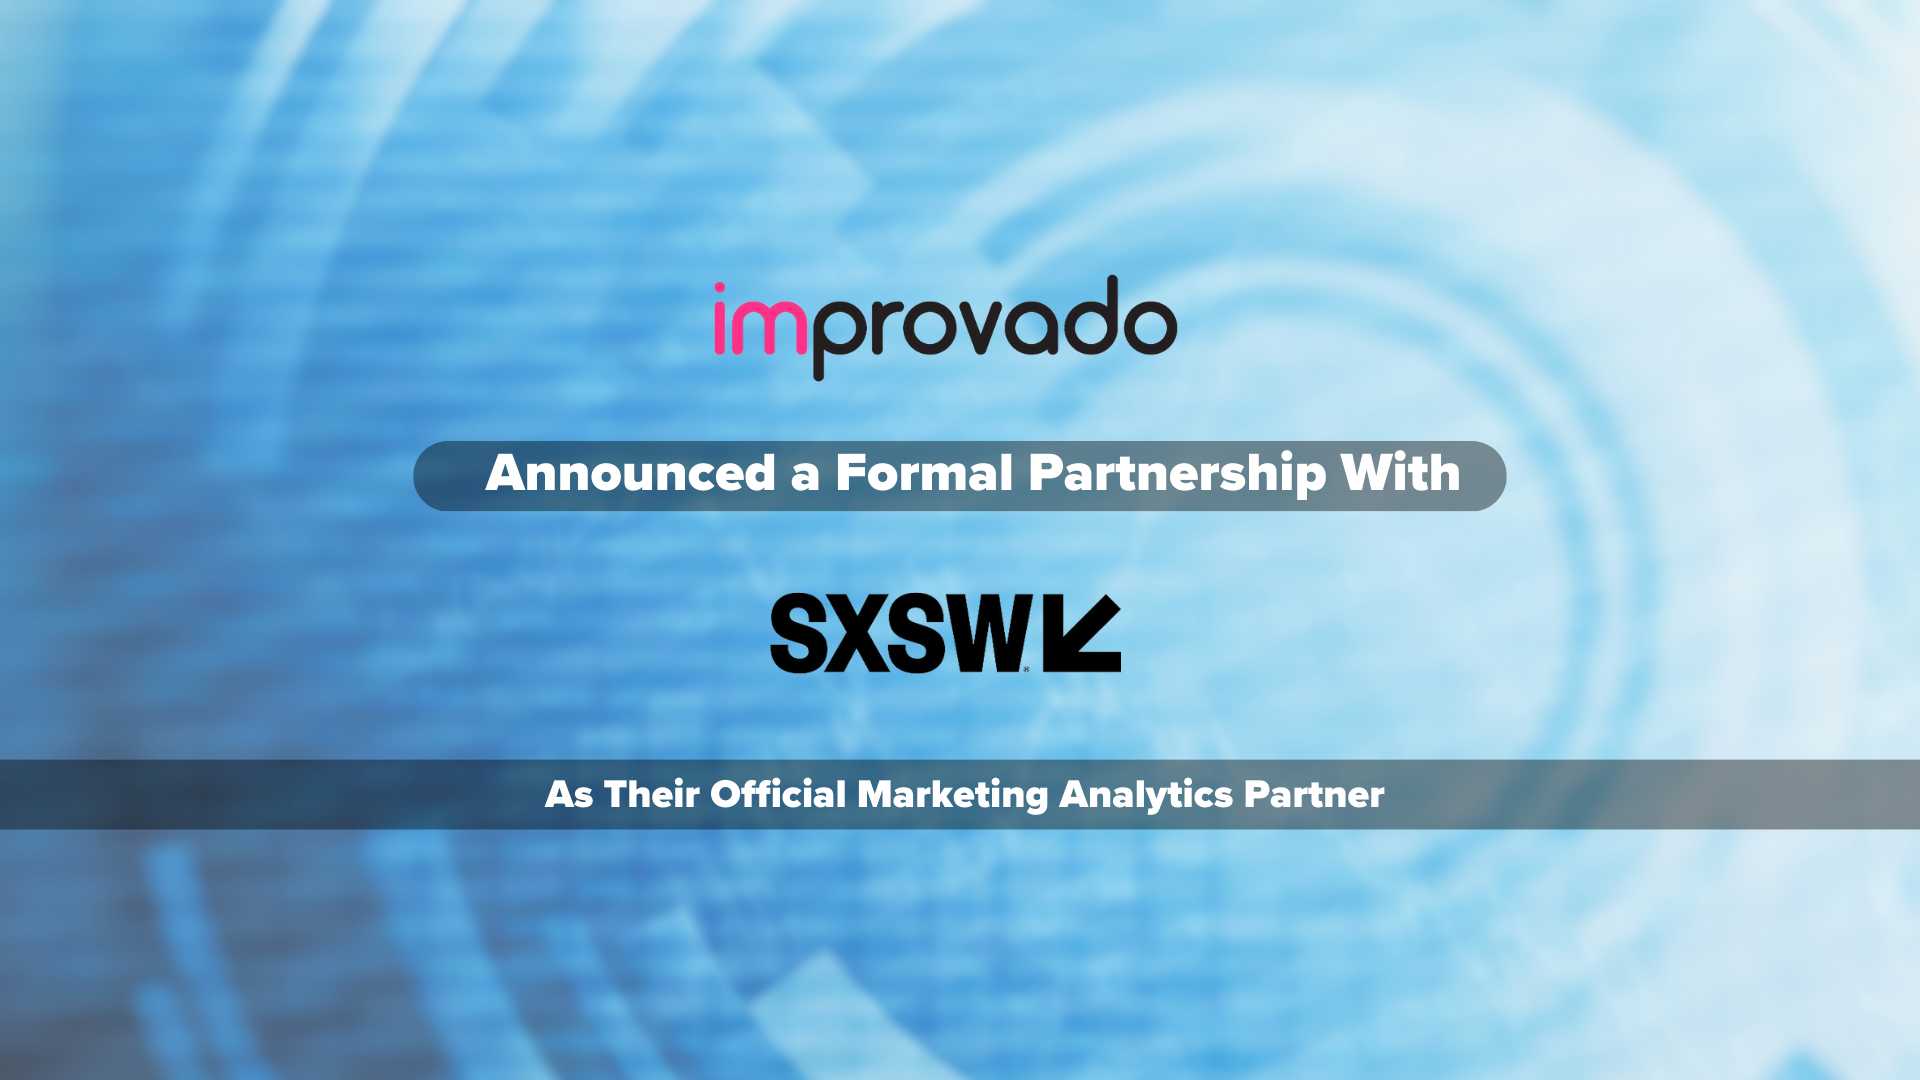 Improvado, SXSW Partner to Elevate Enterprise Marketing Analytics & Insights